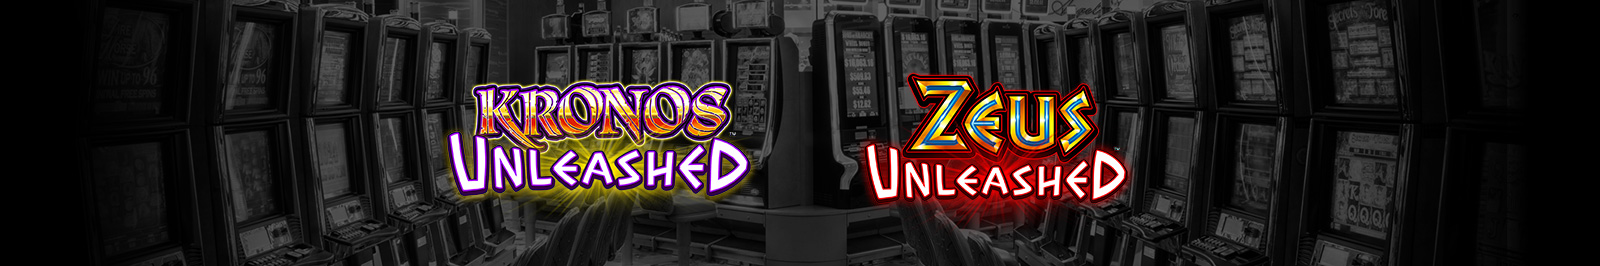 Zeus unleashed slots free